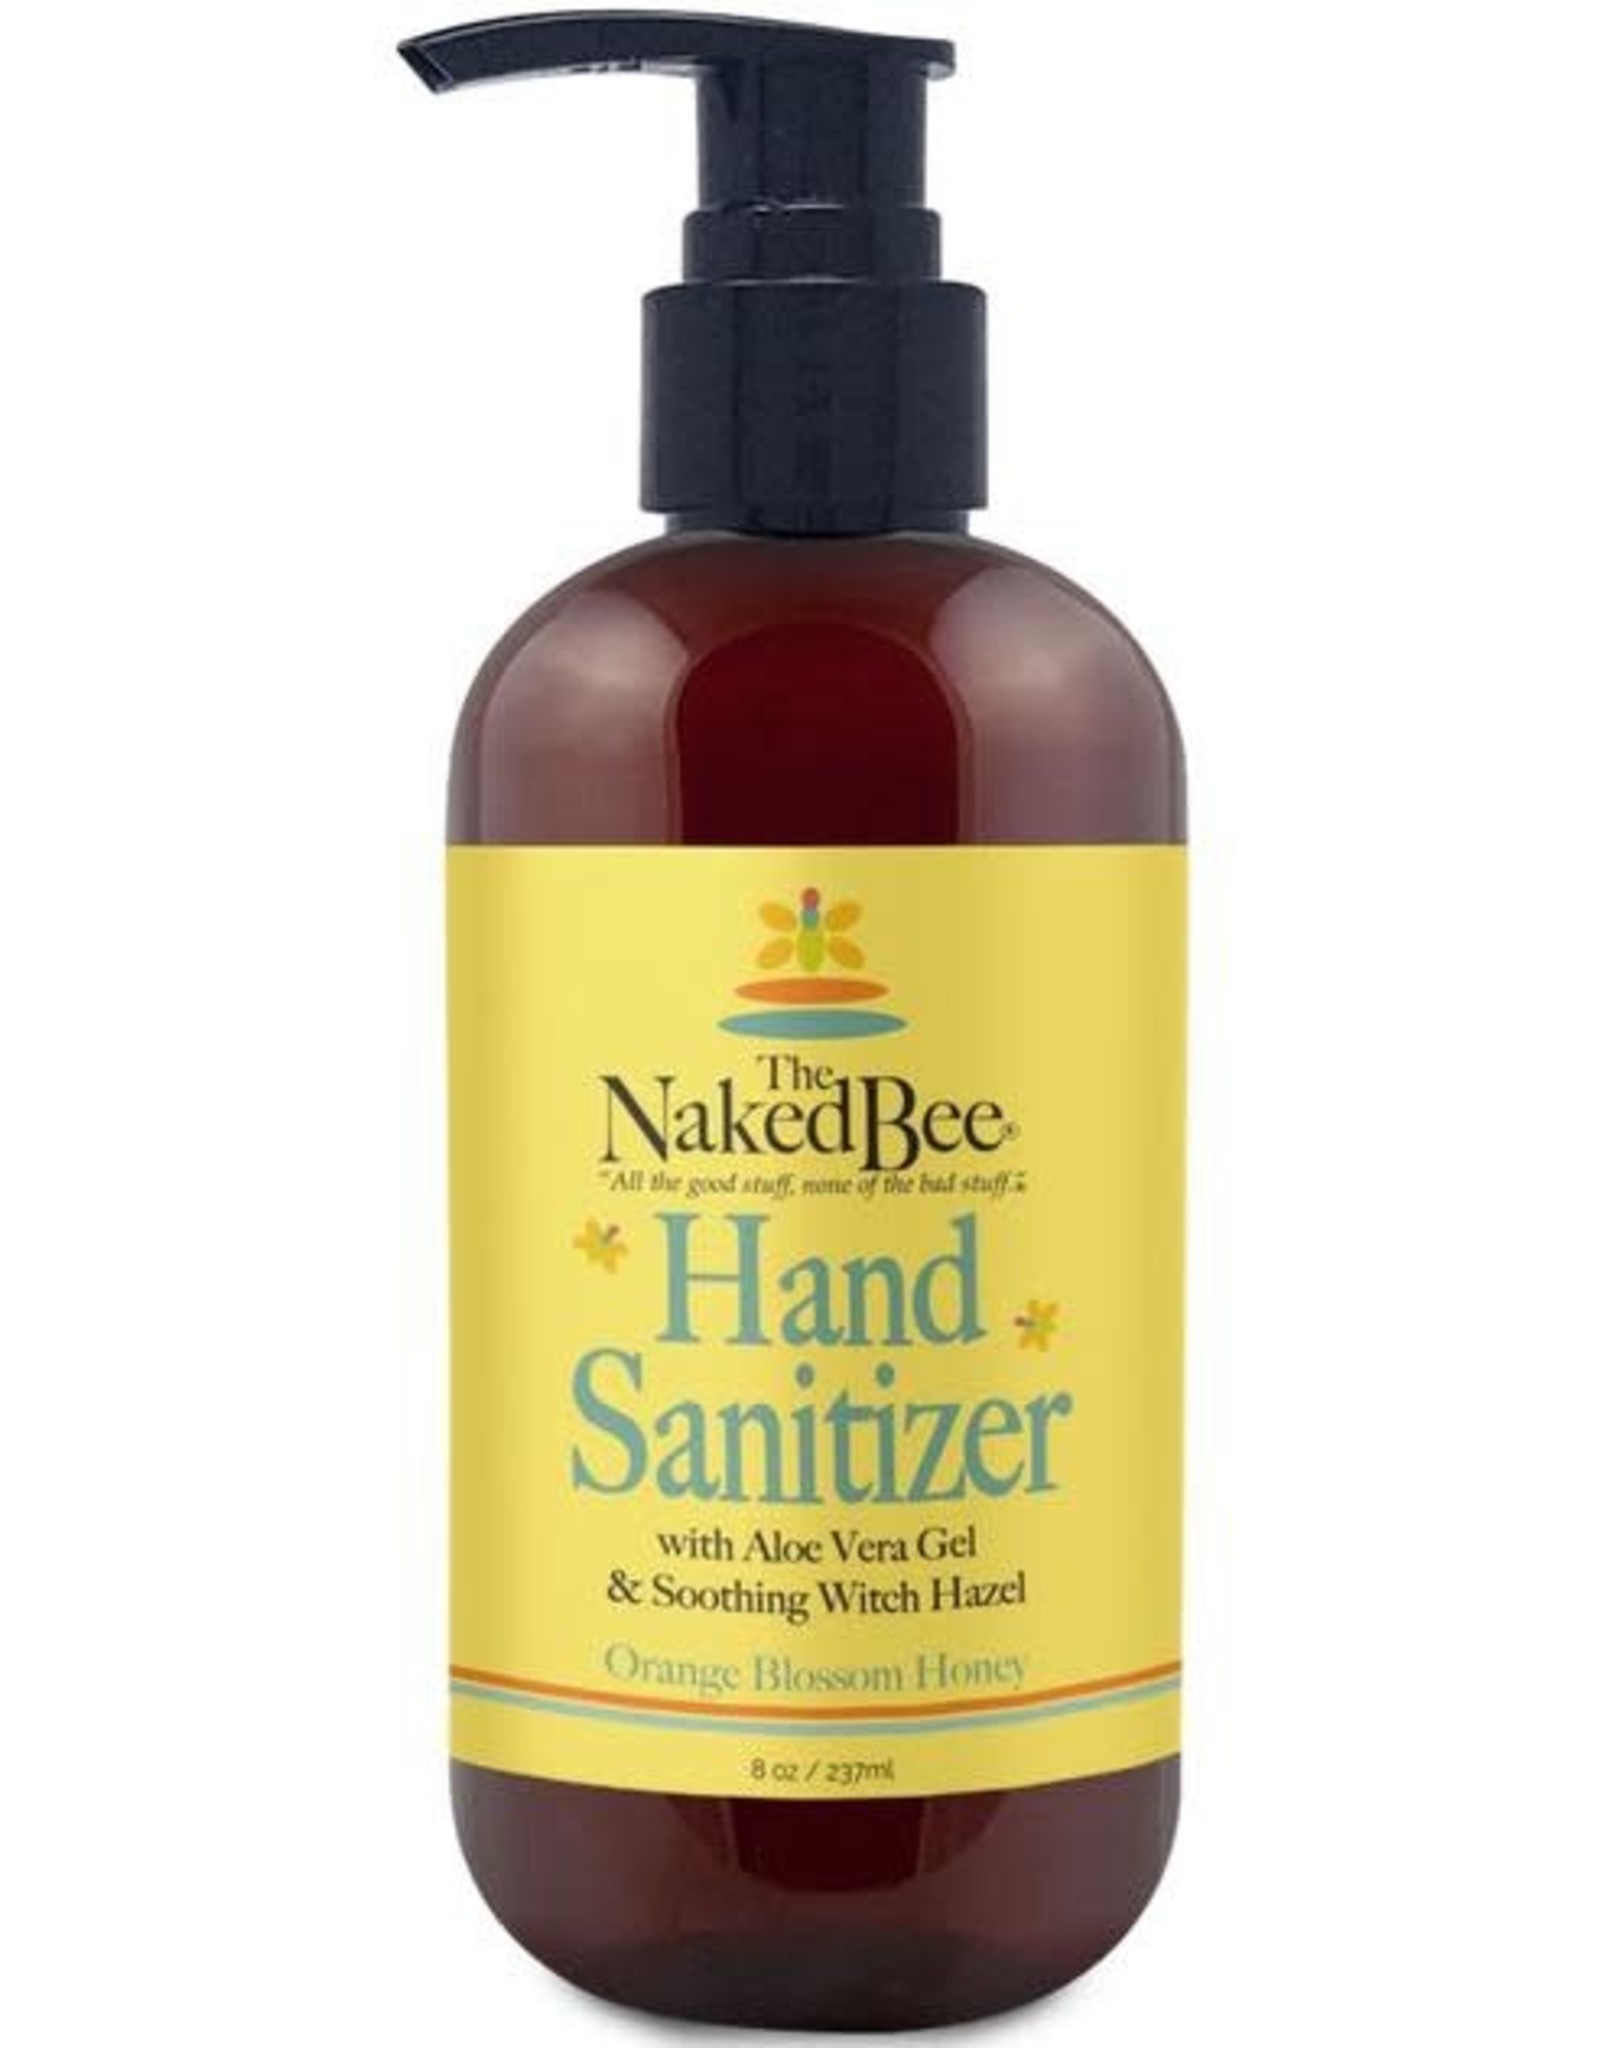 Naked Bee Orange Blossom Honey 8oz Hand Sanitizer